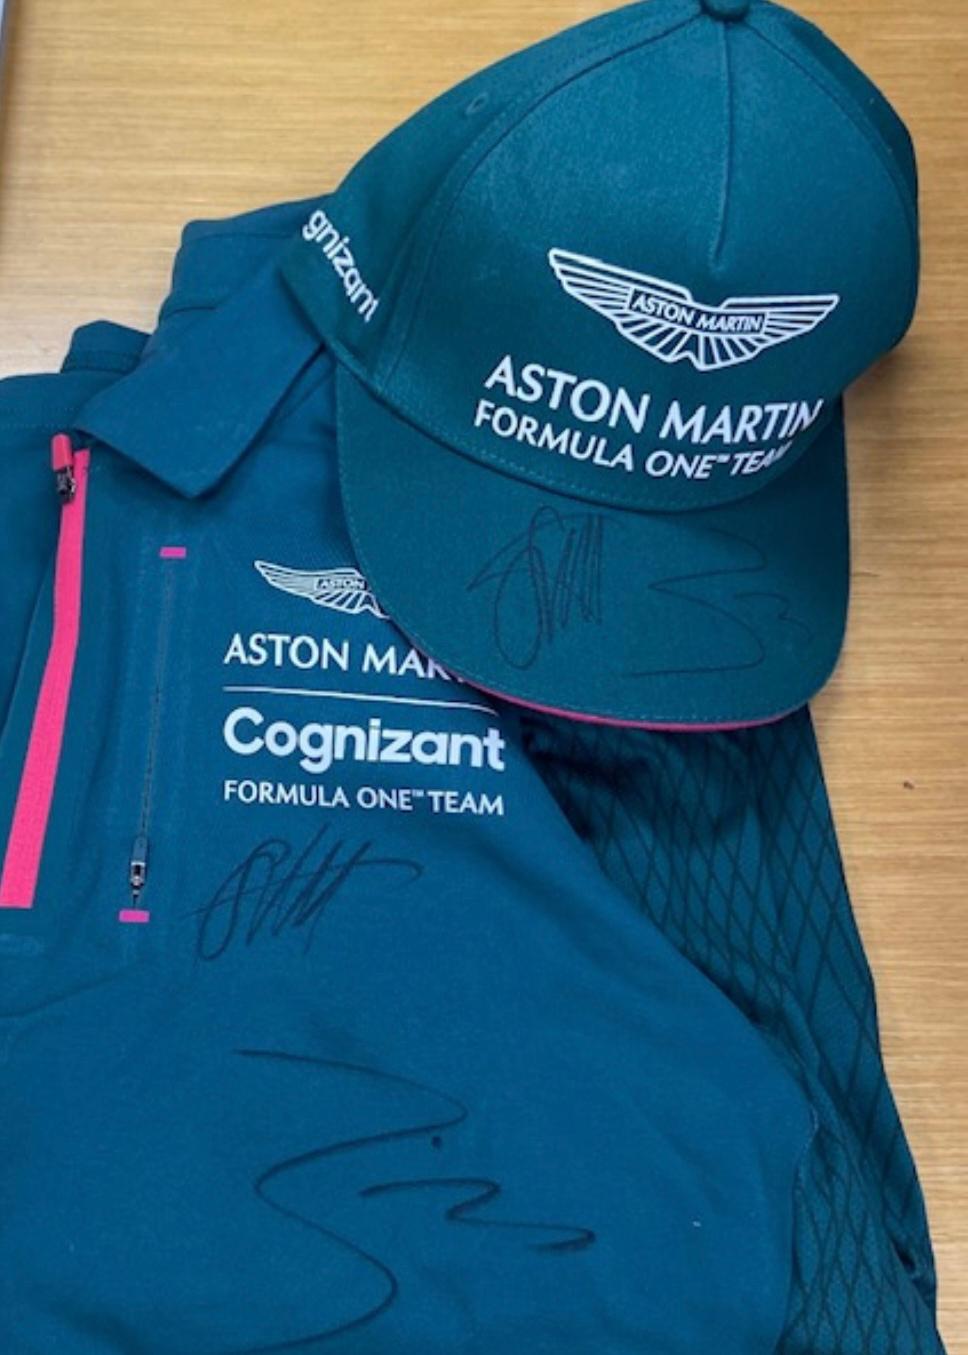 Aston Martin Formula 1 cap and shirt signed by Lance Stroll and Sebastian Vettel